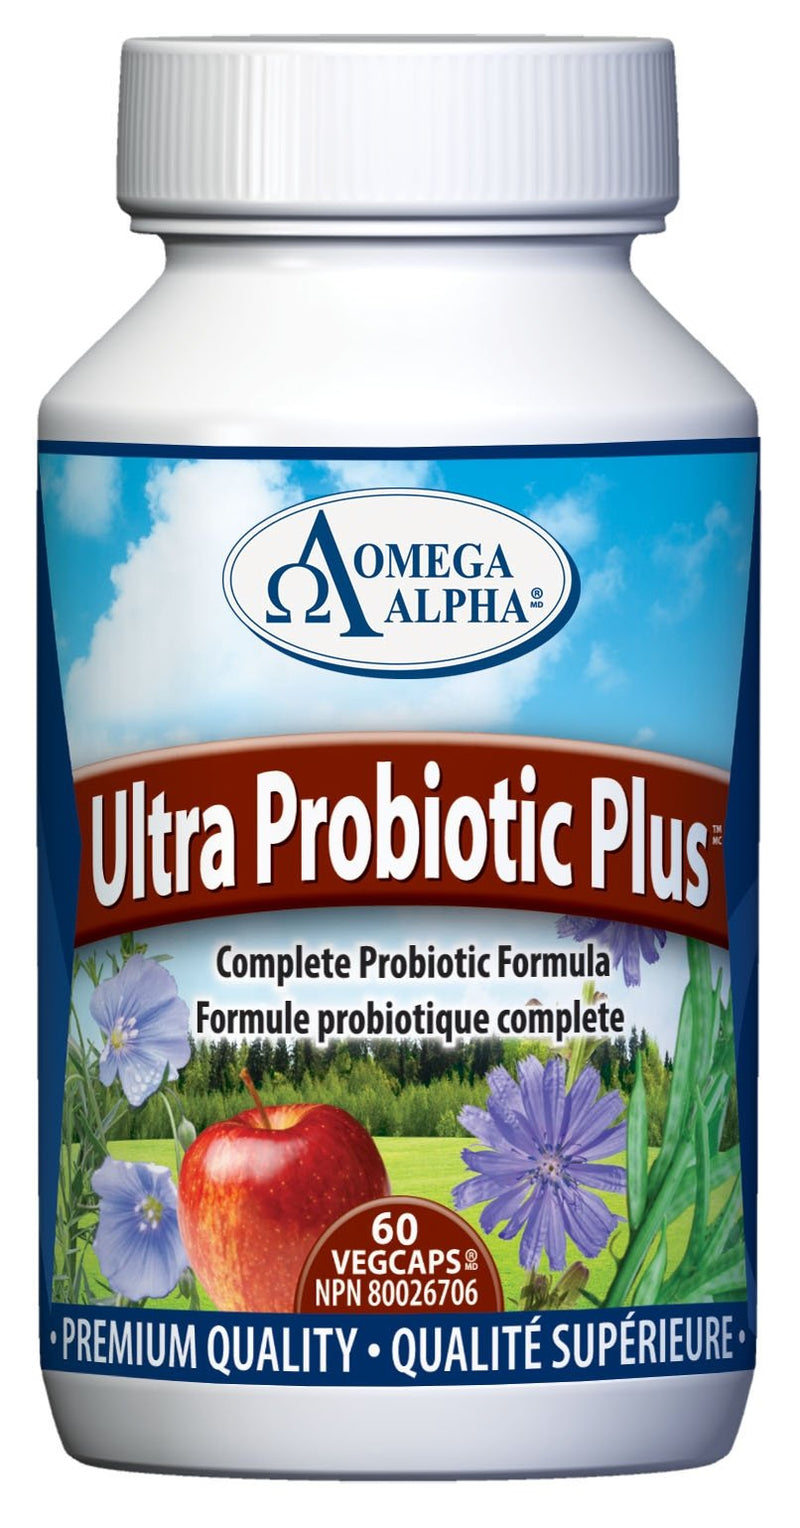 Omega Alpha Ultra Probiotic Plus 60 VCaps Image 1